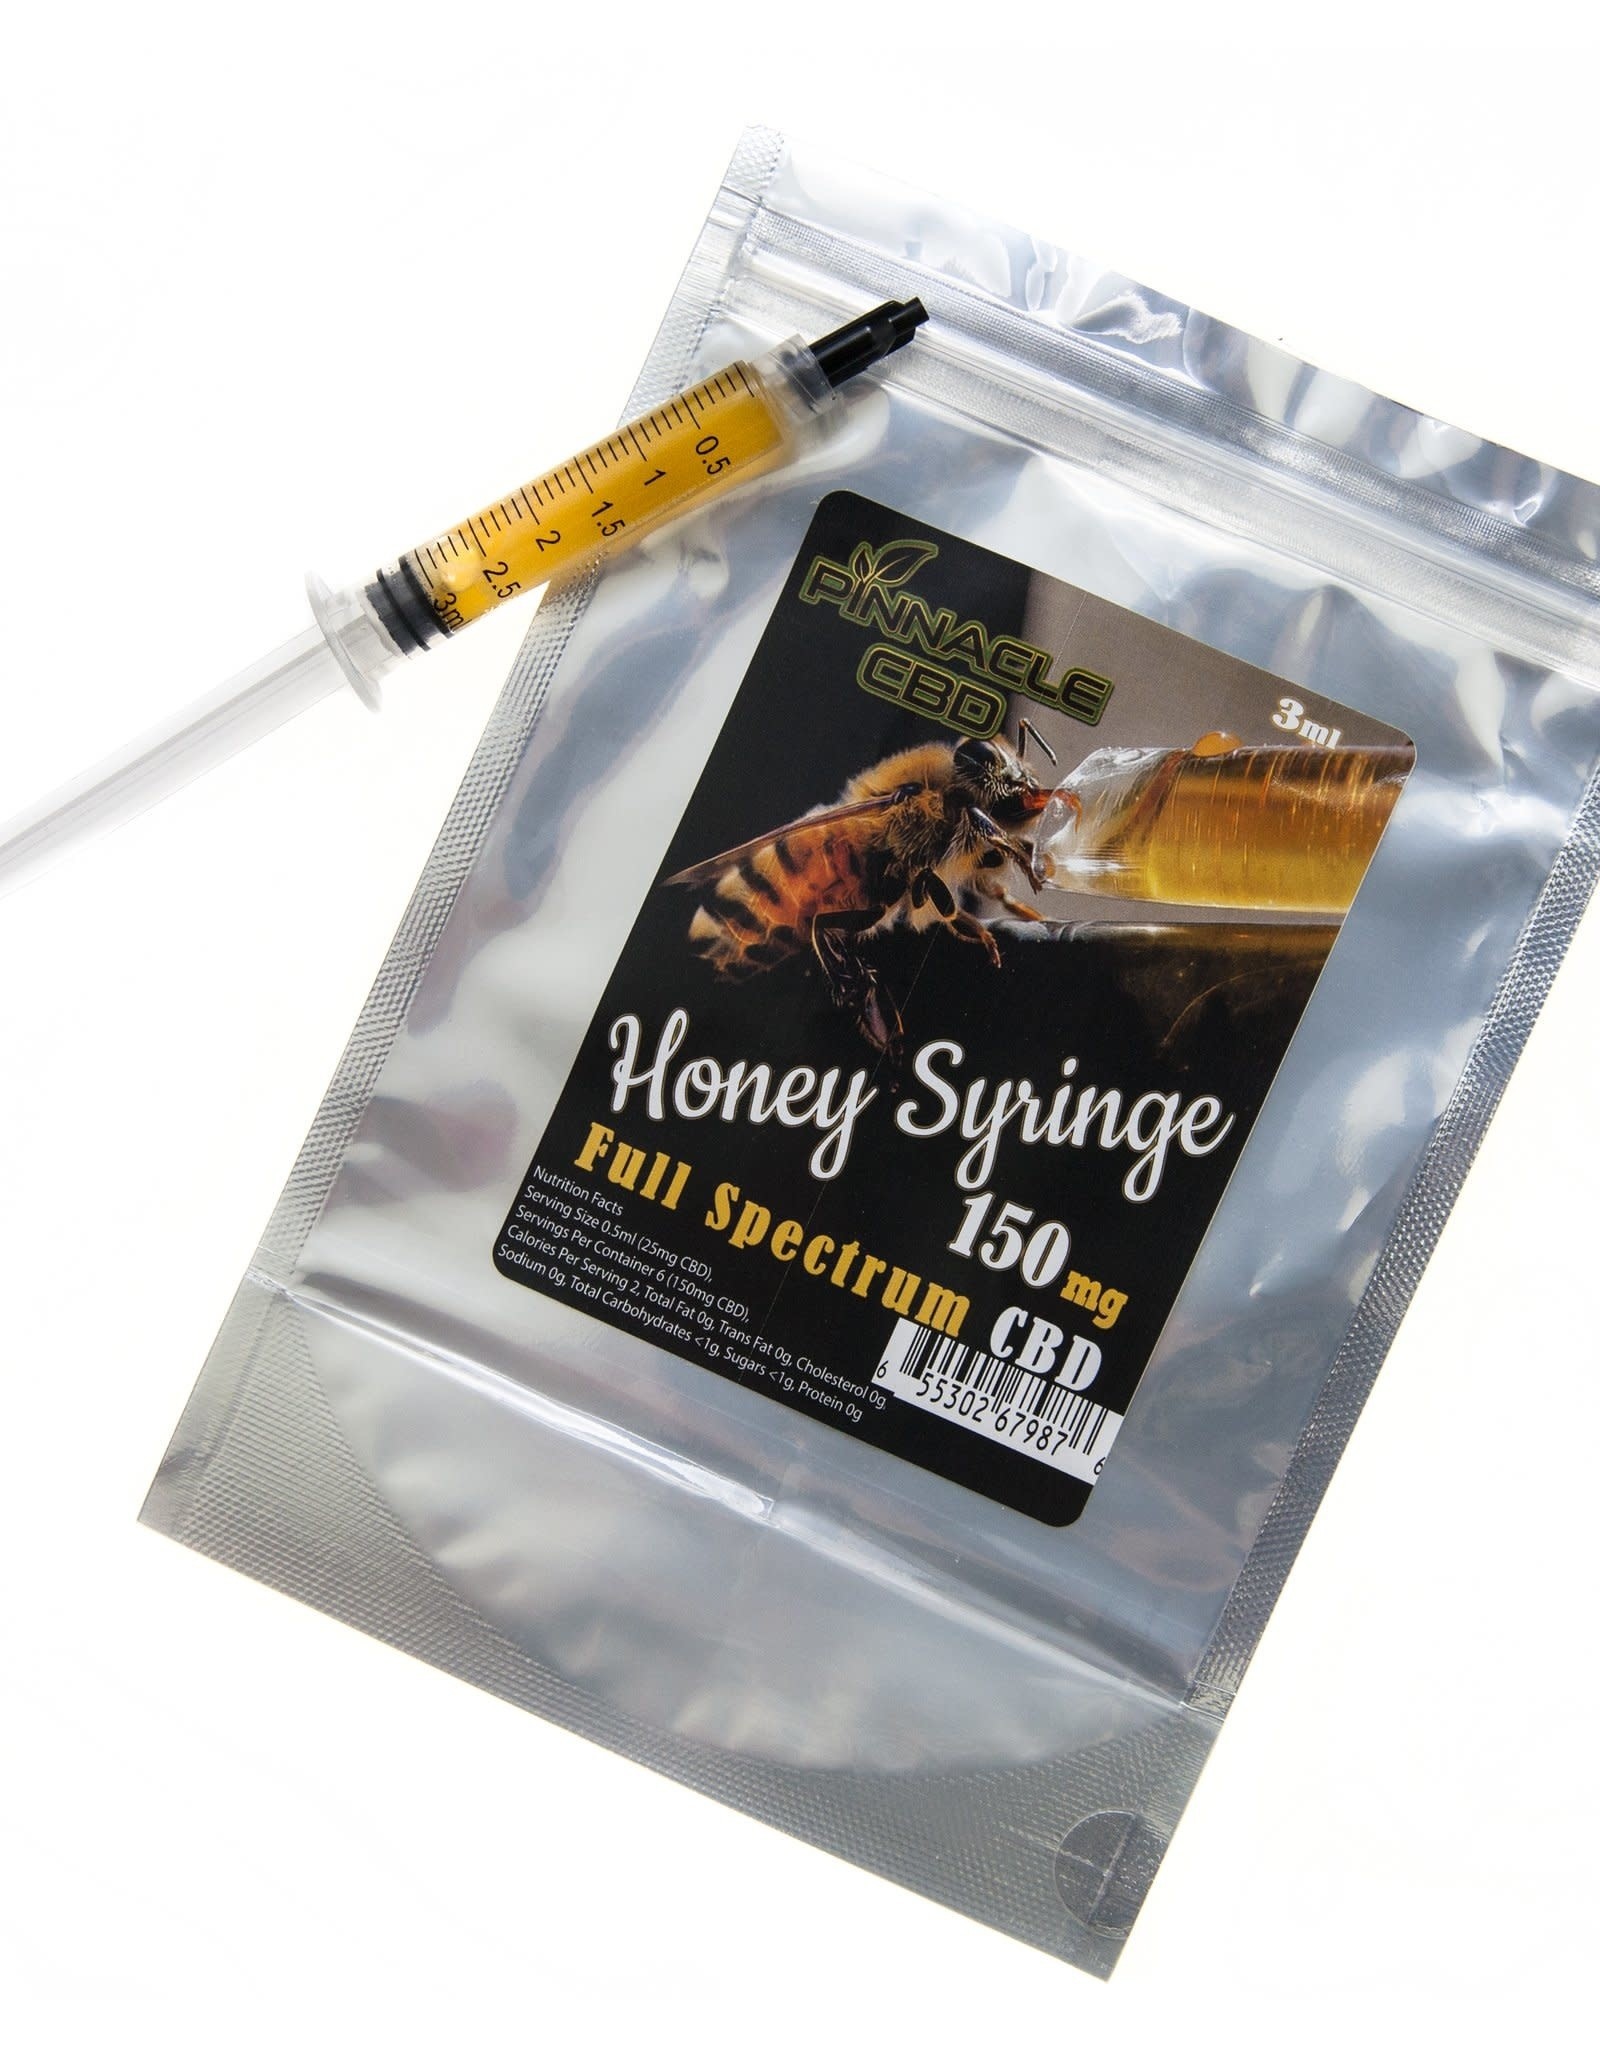 Pinnacle Hemp Full Spectrum CBD Honey Syringe 150mg